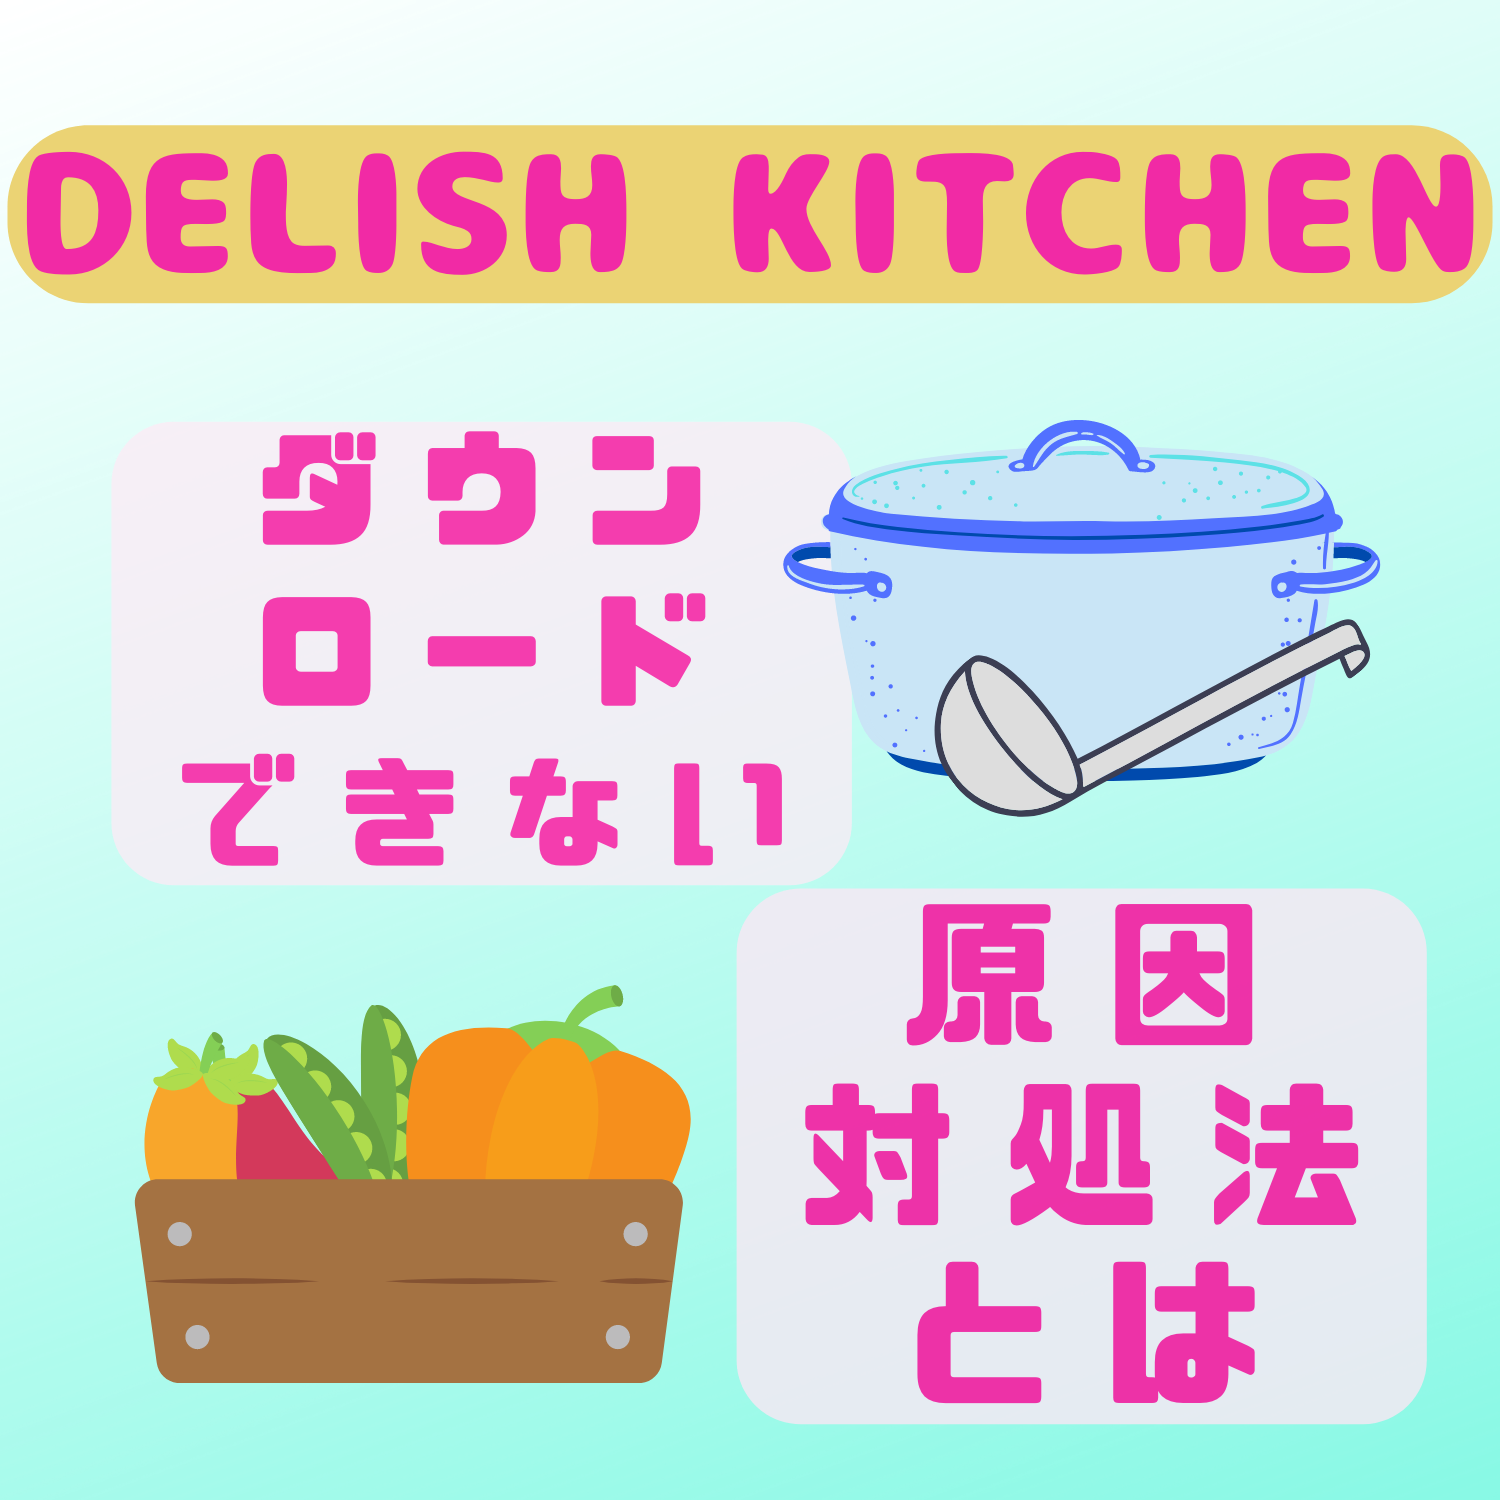 DELISH KITCHEN(デリッシュキッチン)をダウンロードできない原因と対処法とは #デリッシュキッチン